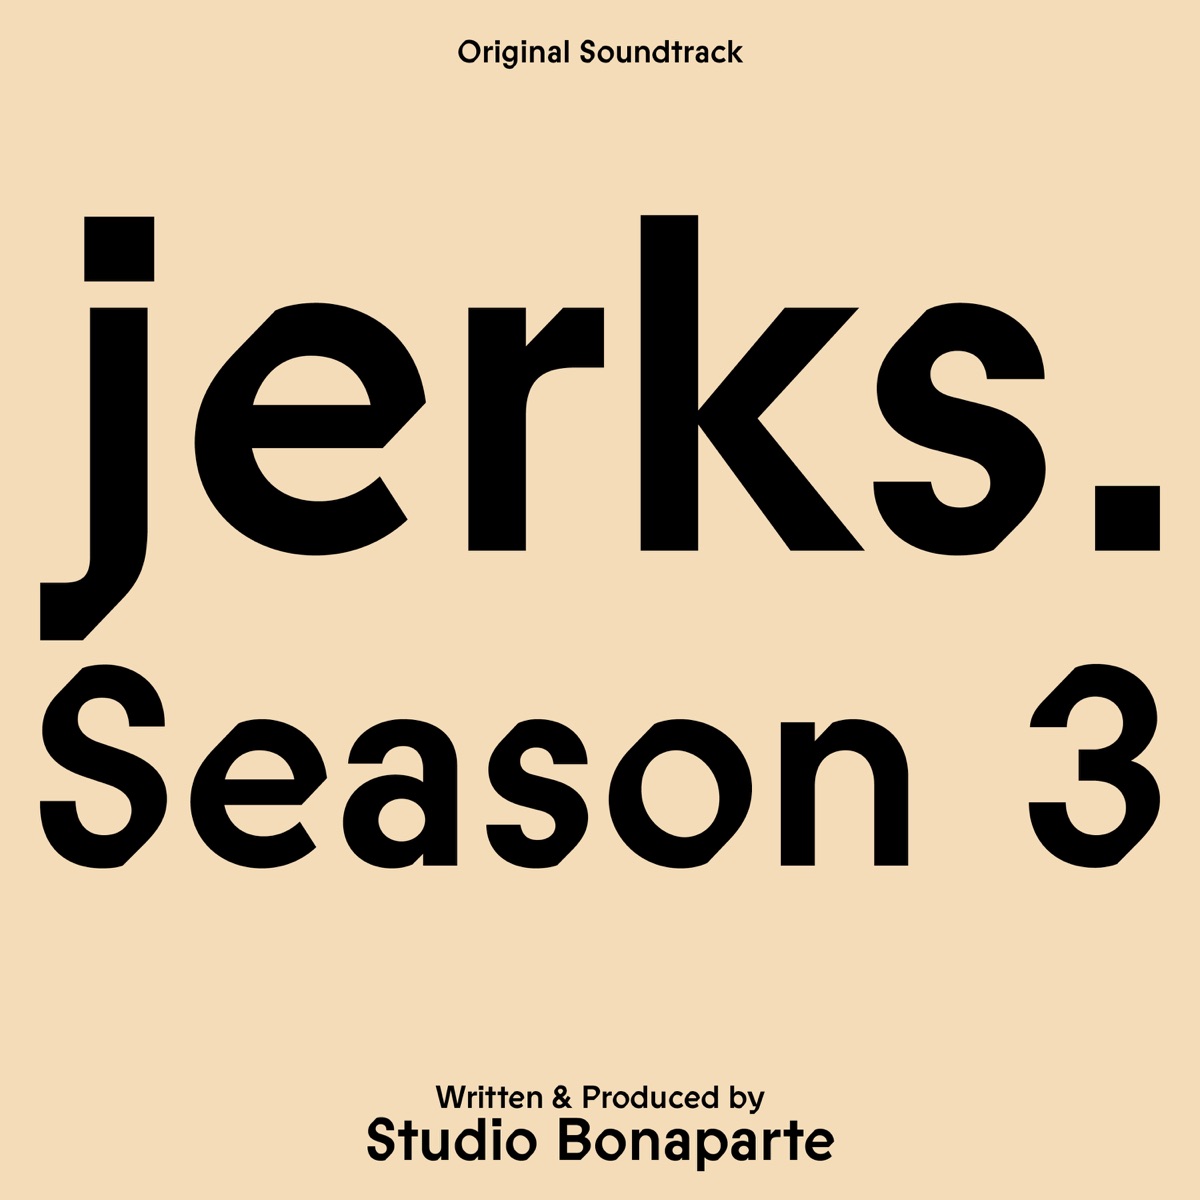 jerks. Season 4 (Original Soundtrack) - Album by Studio Bonaparte - Apple  Music